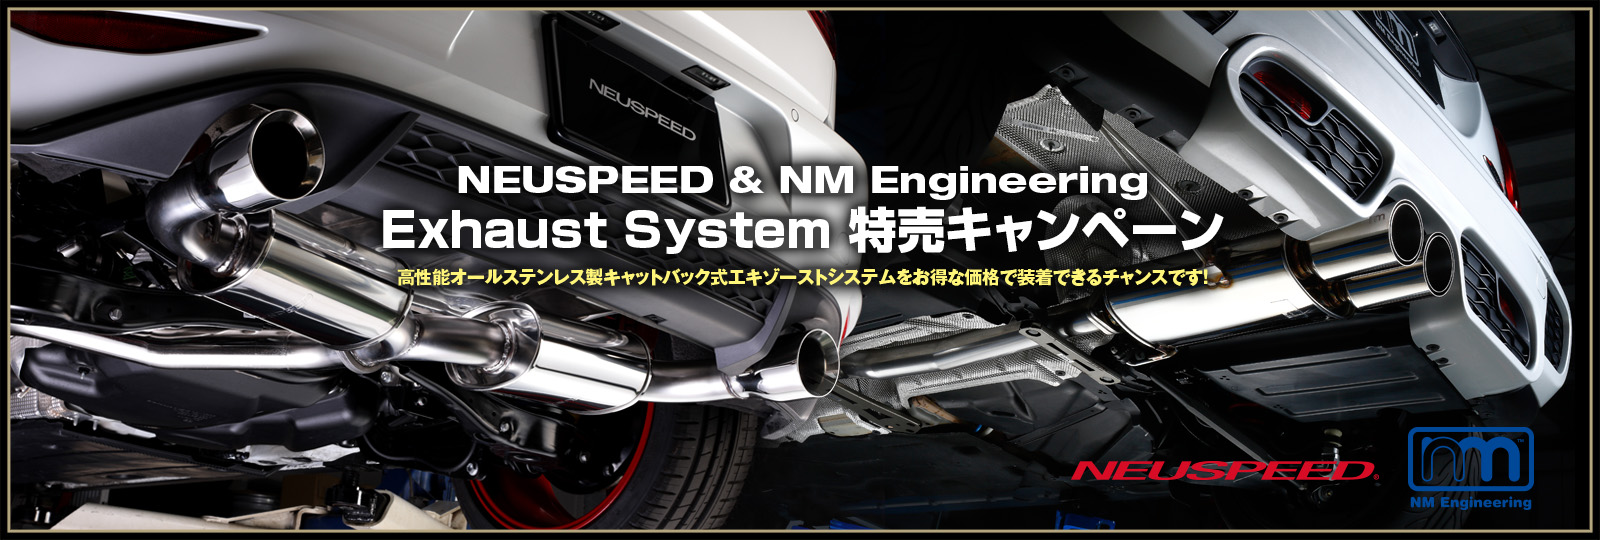 NEUSPEED & NM Engineering Exhaust System 特売キャンペーン